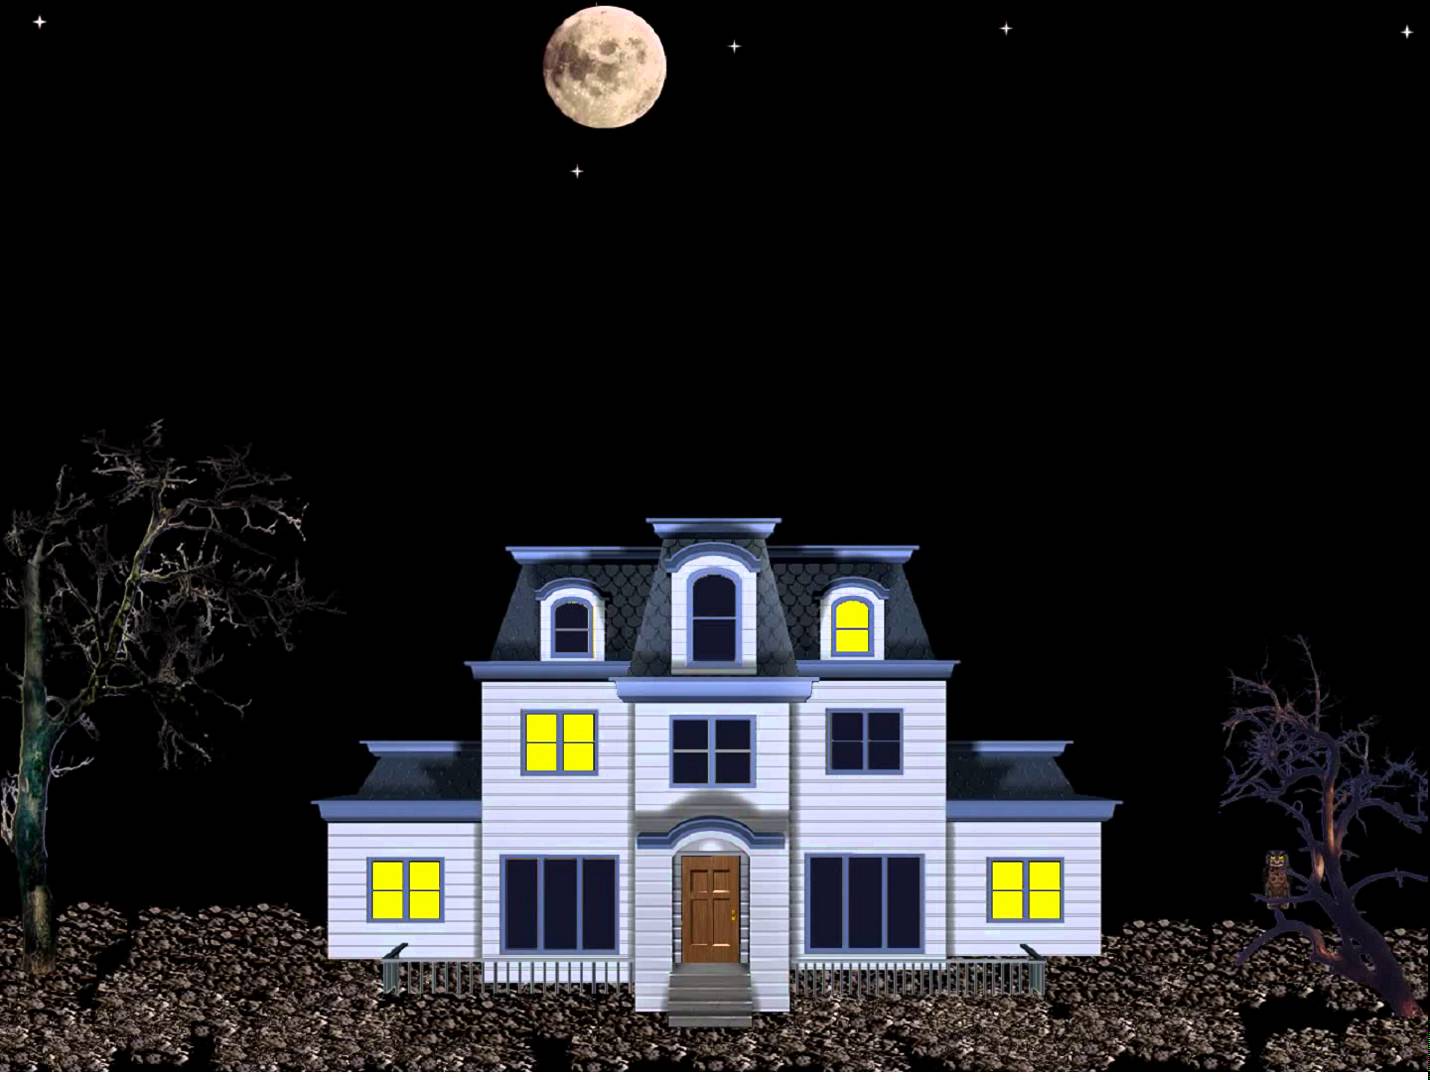  Screensavers Haunted Mansion Screensaver Haunted House 3D Screensaver